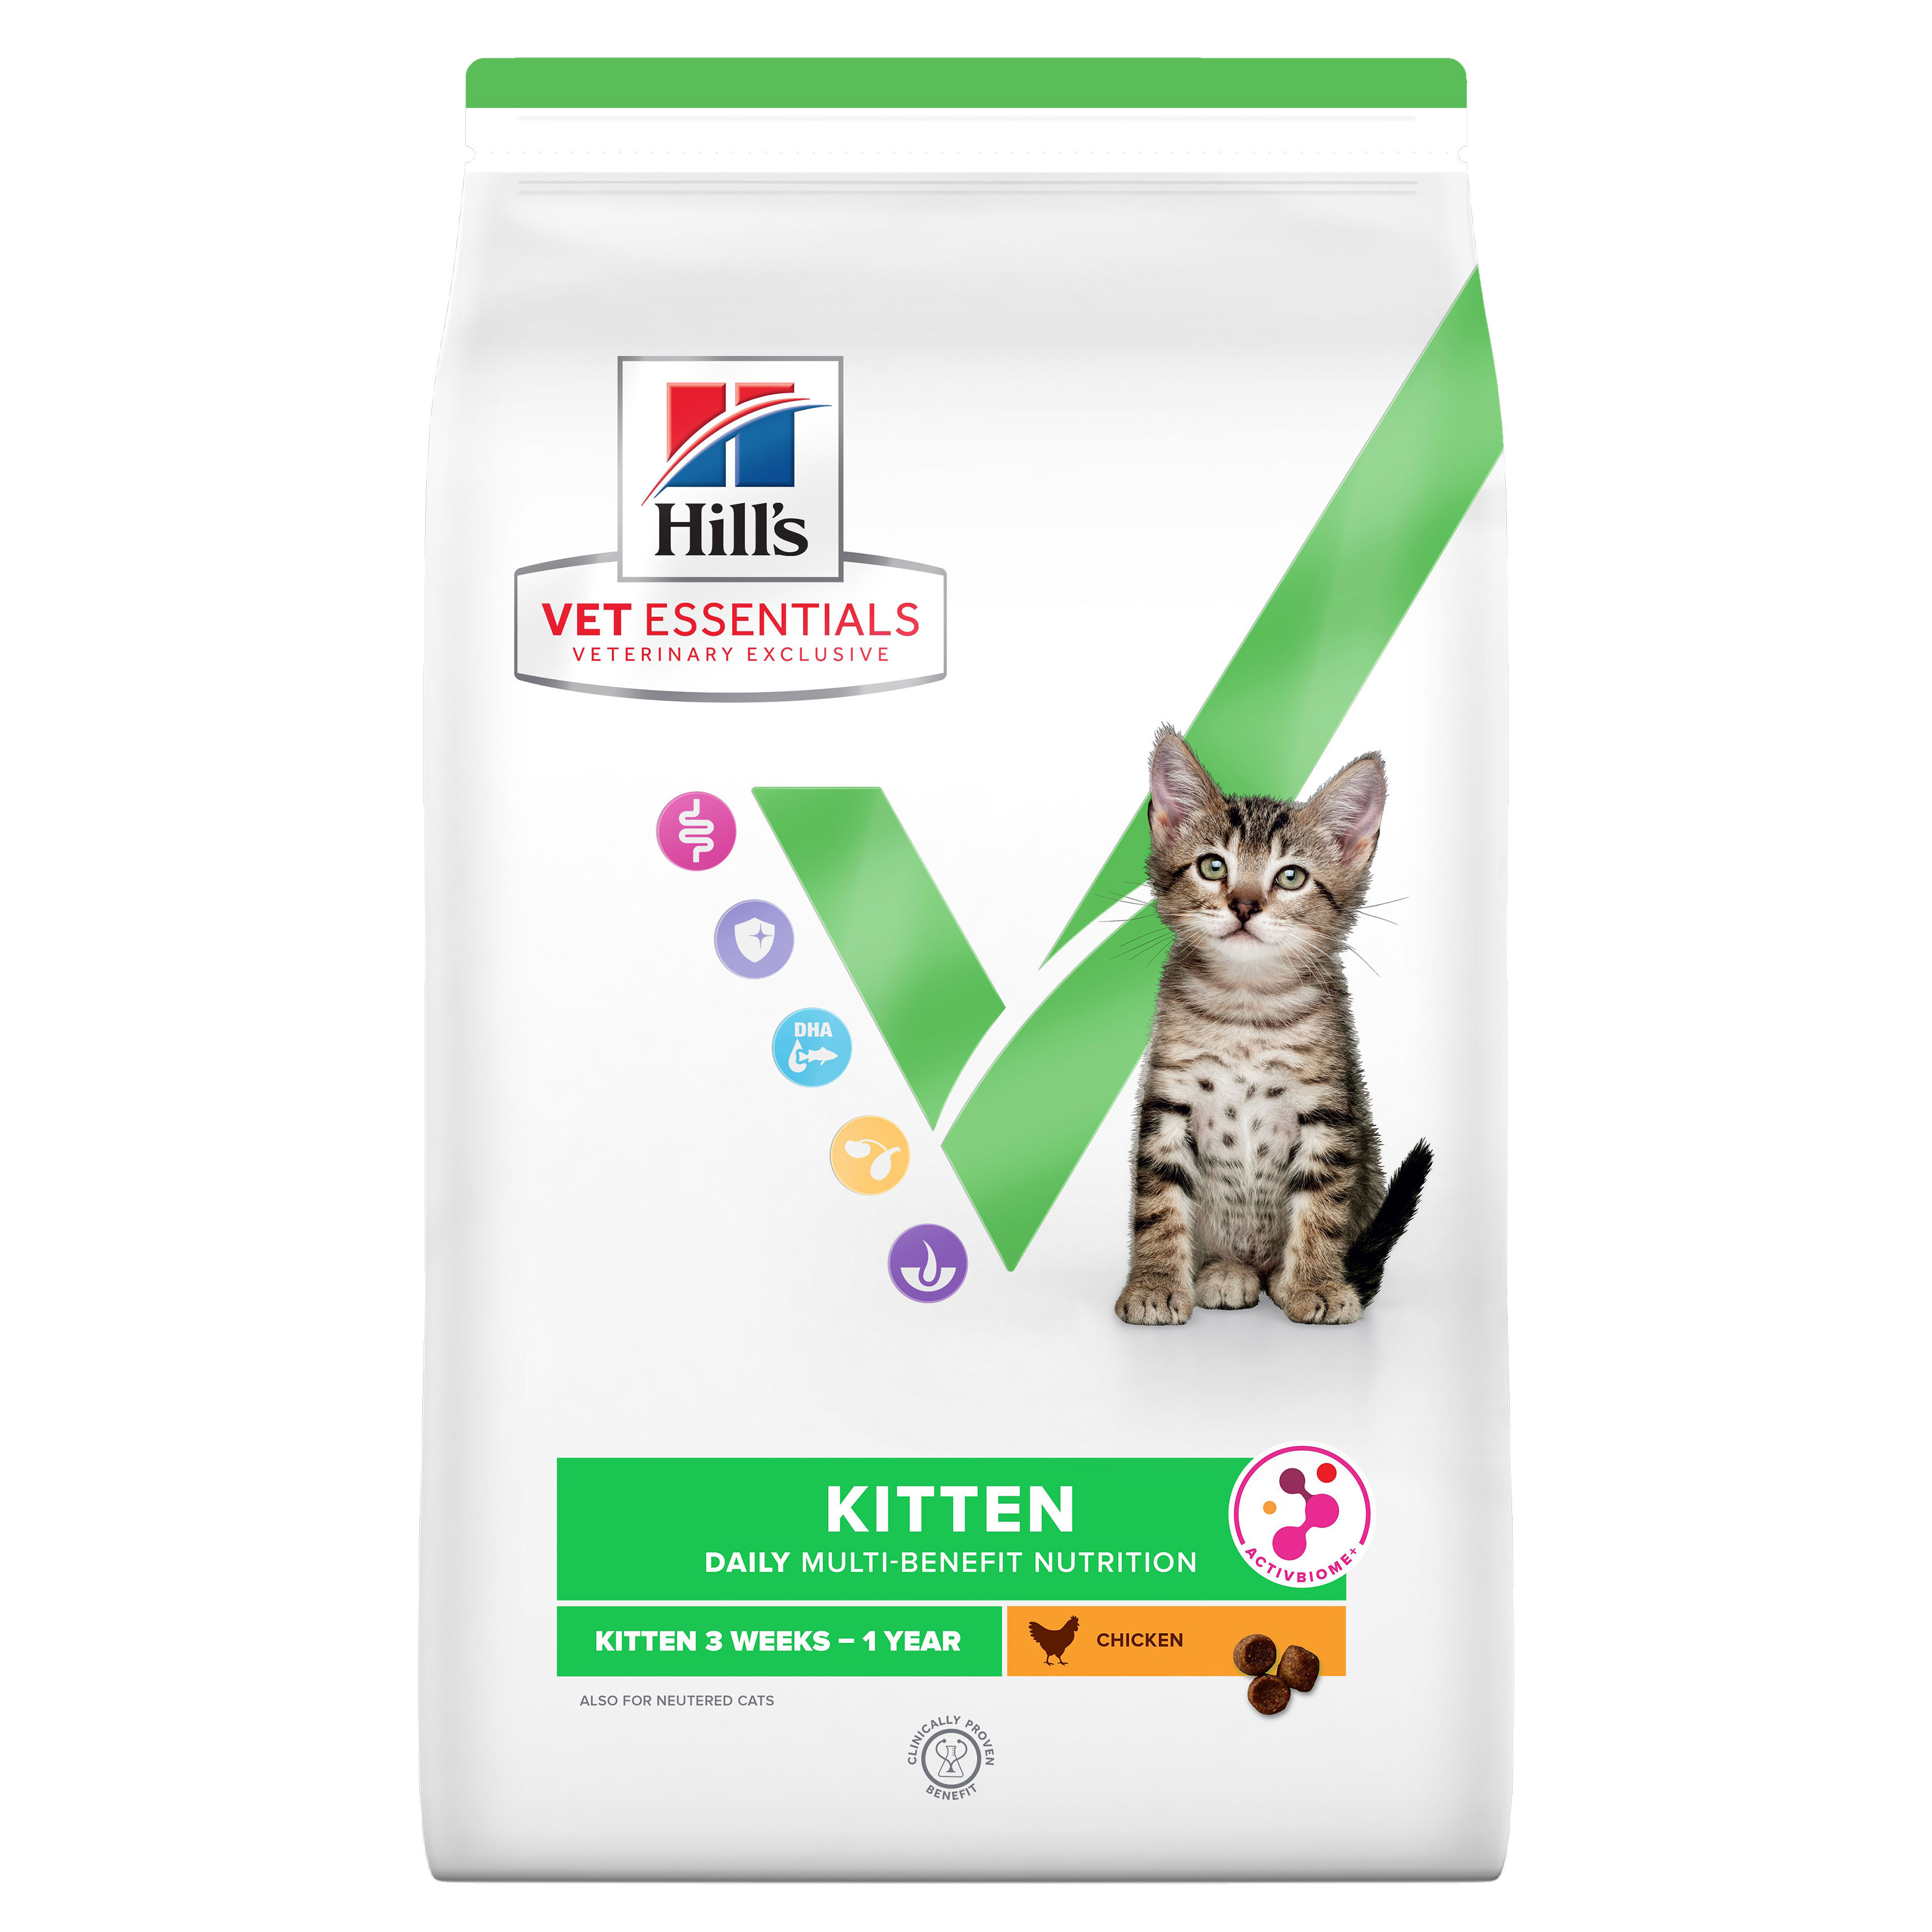 Hill's Vet Essentials מולטי בנפיט גור חתול, 3 ק"ג